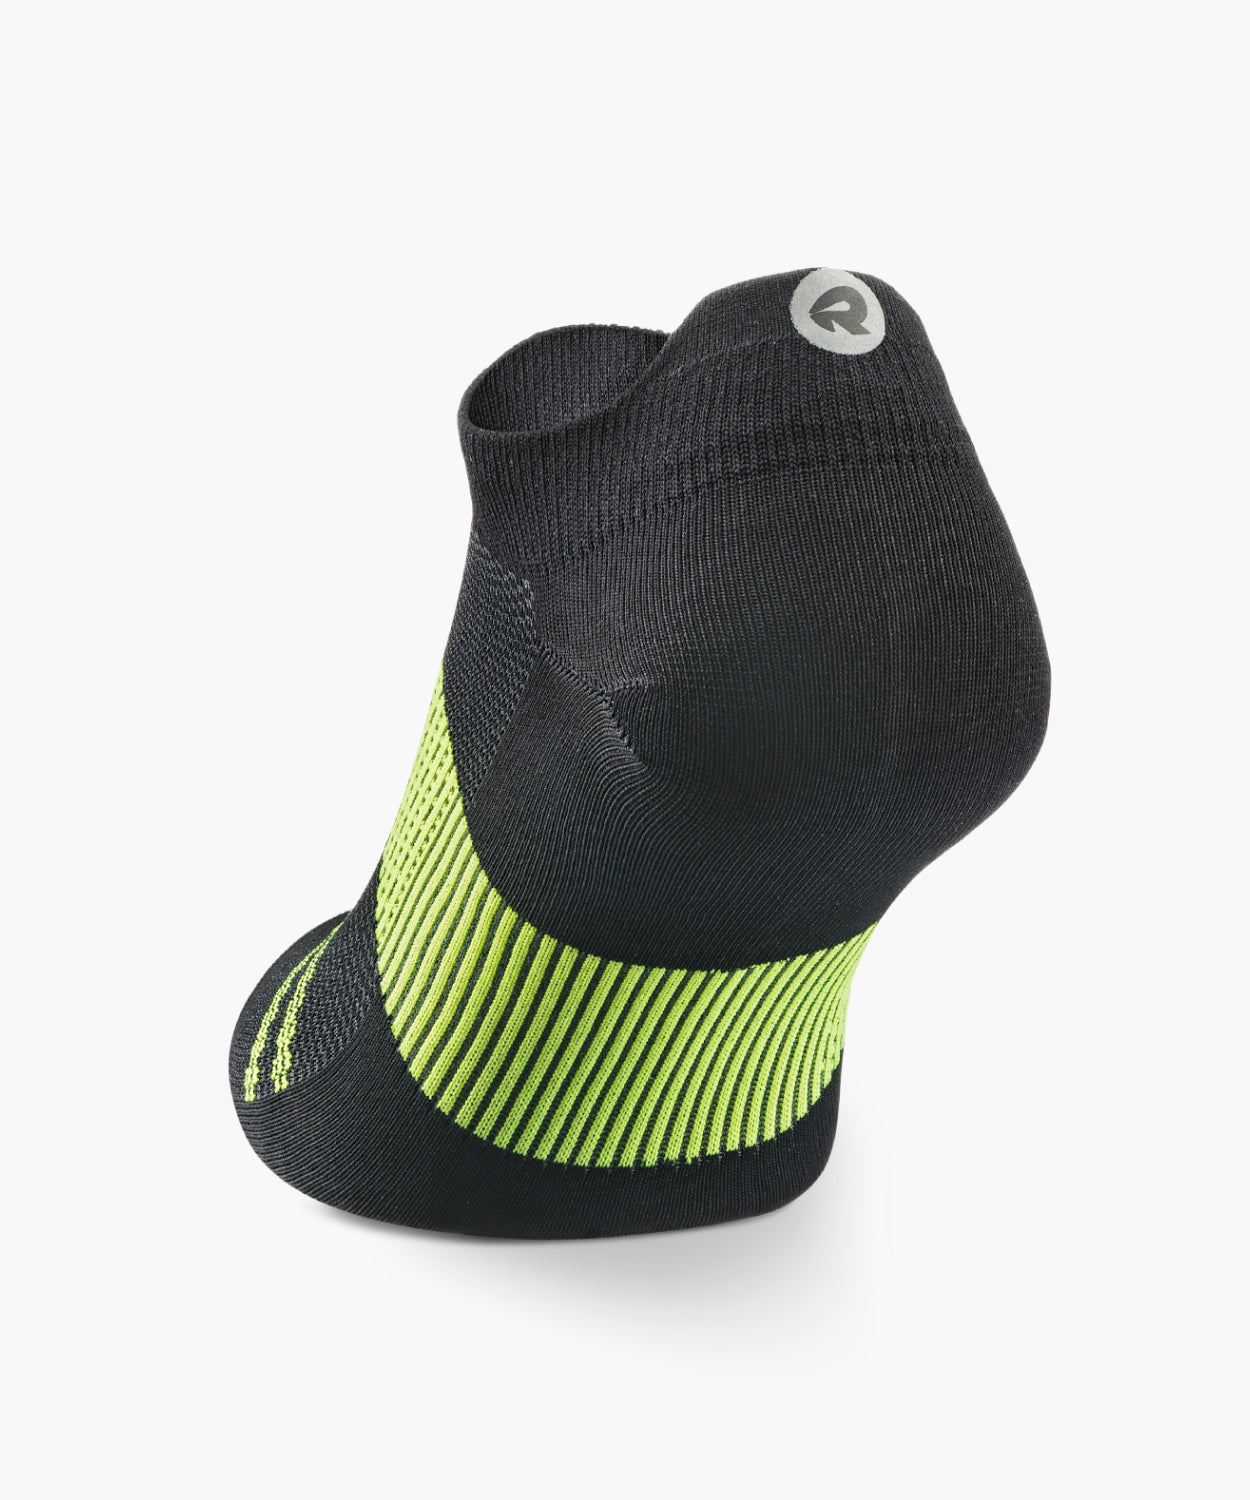 Agile Ultra Light Socks